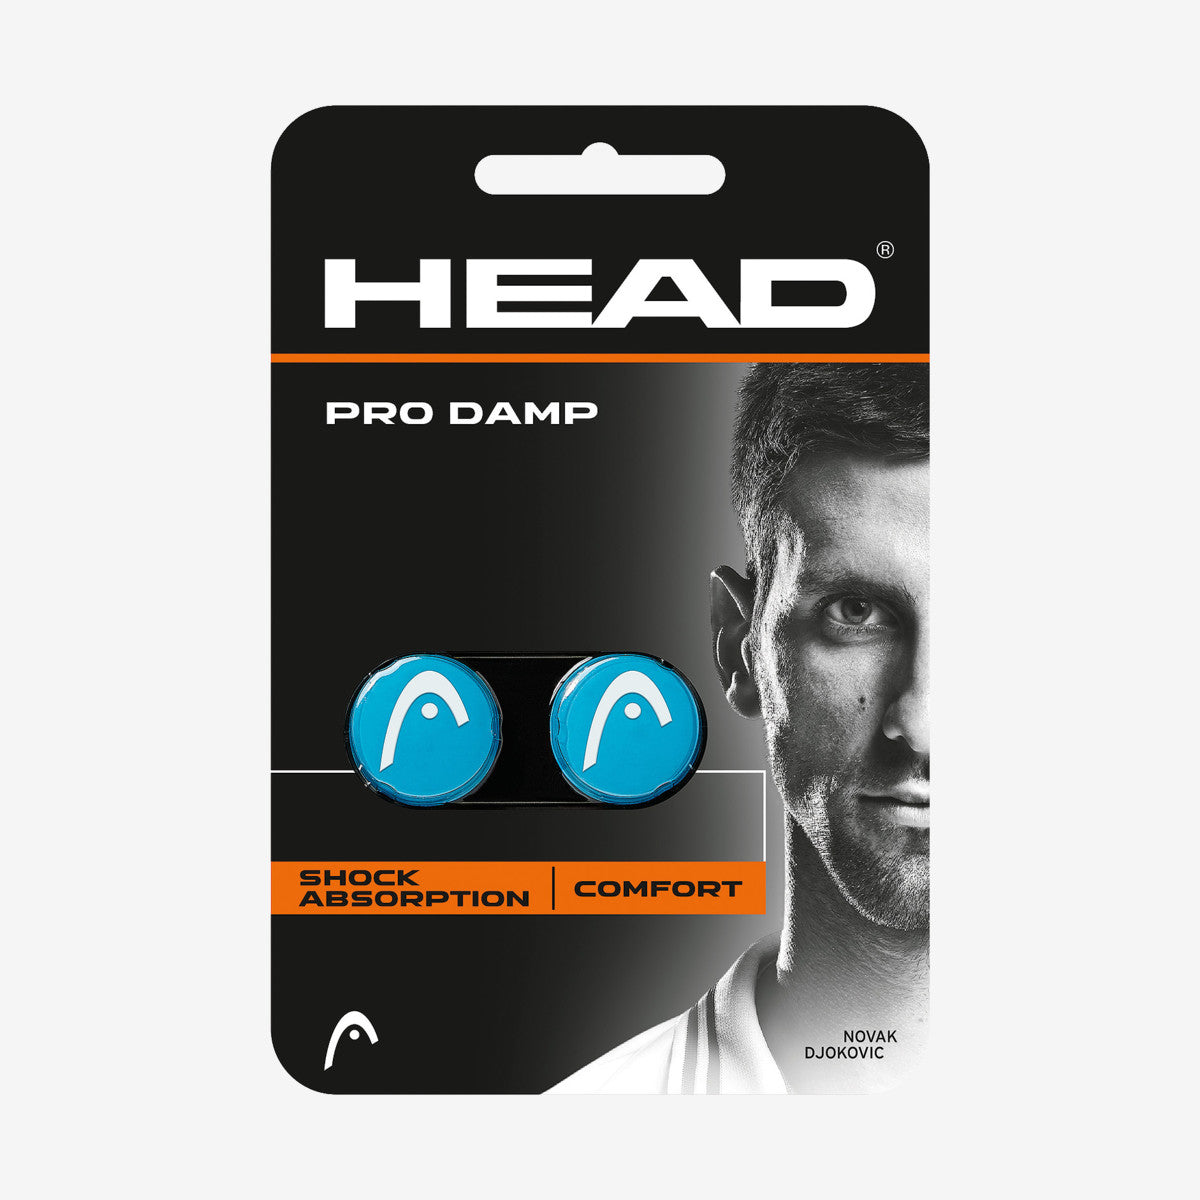 HEAD PRO DAMP TENNIS DAMPENER